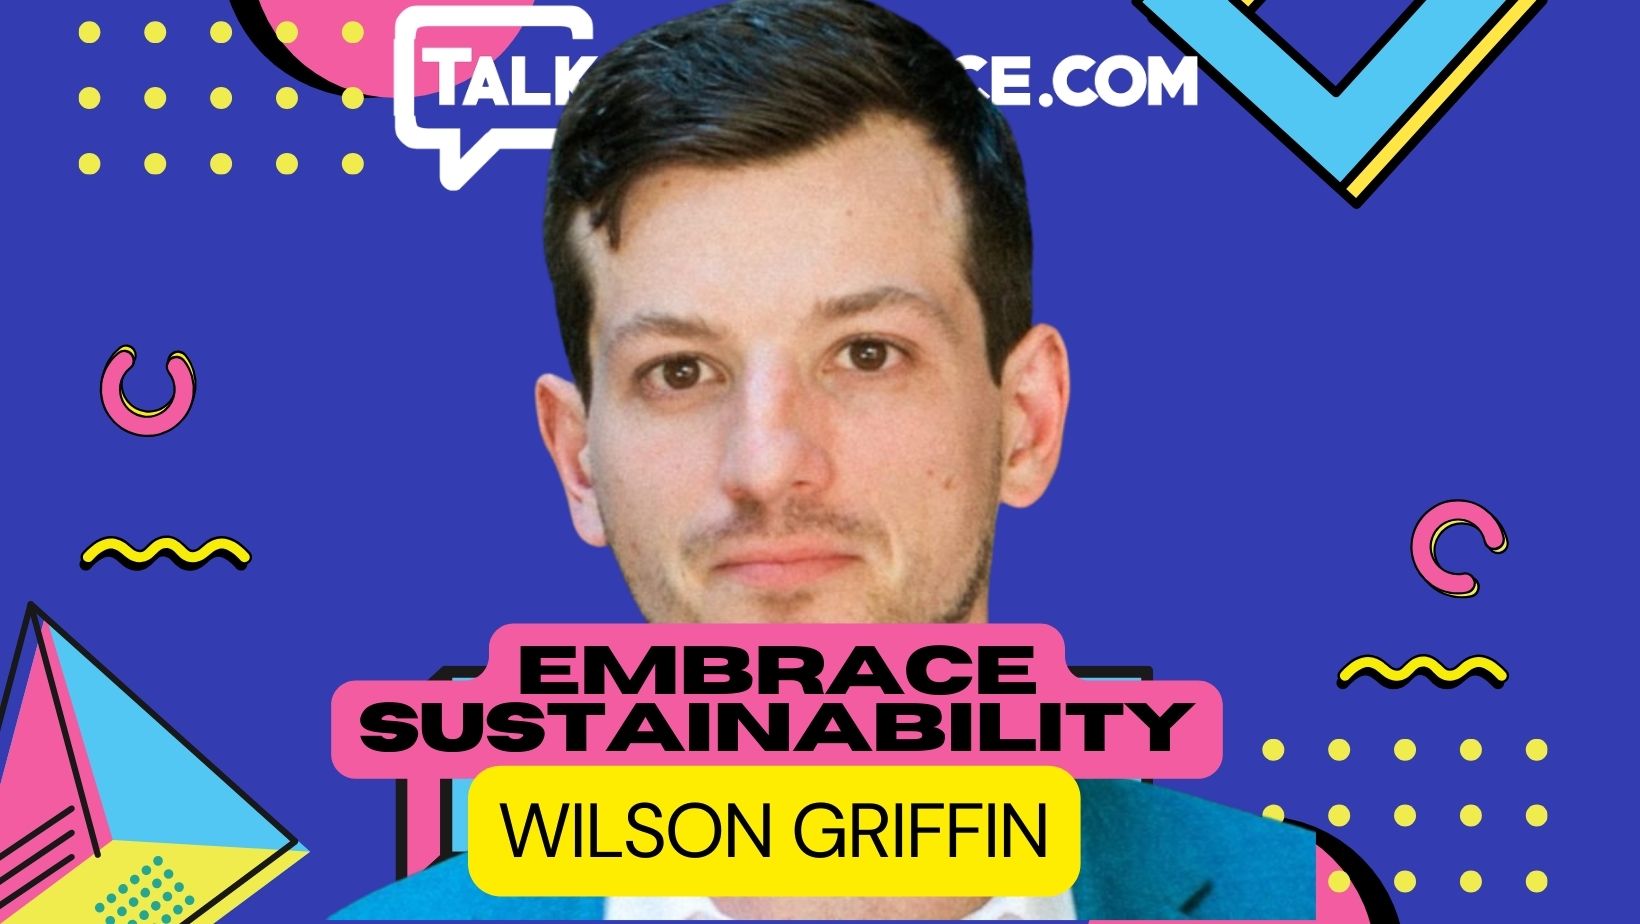 Talk Commerce WILSON GRIFFIN